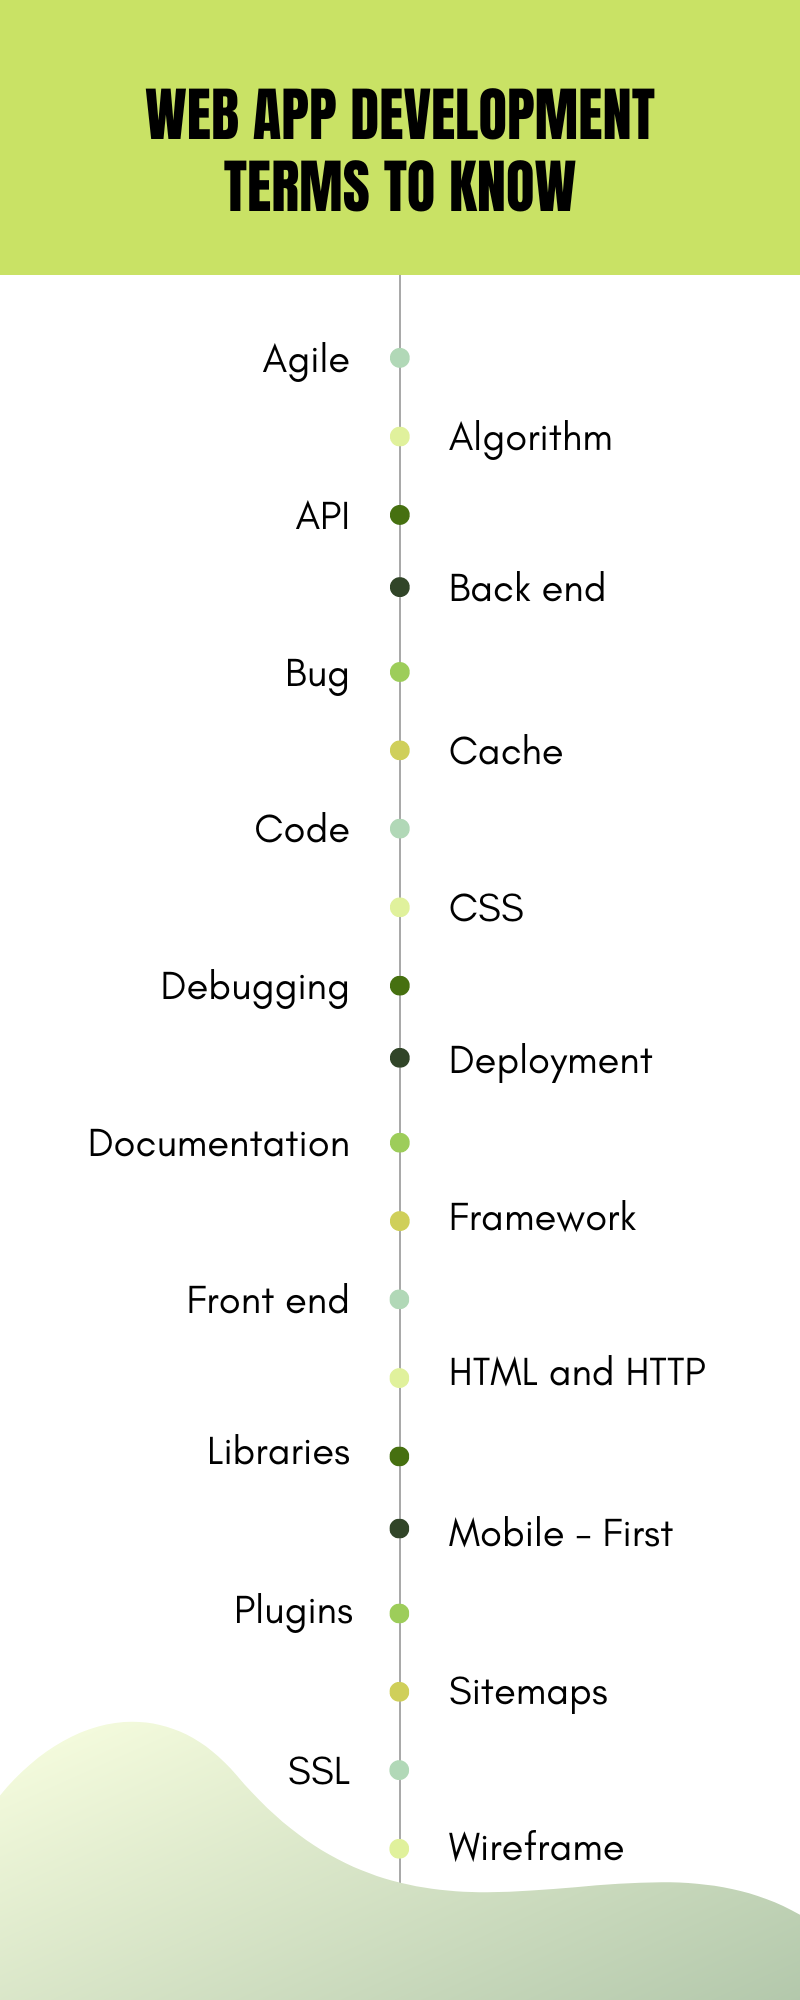 Web App Development Terms